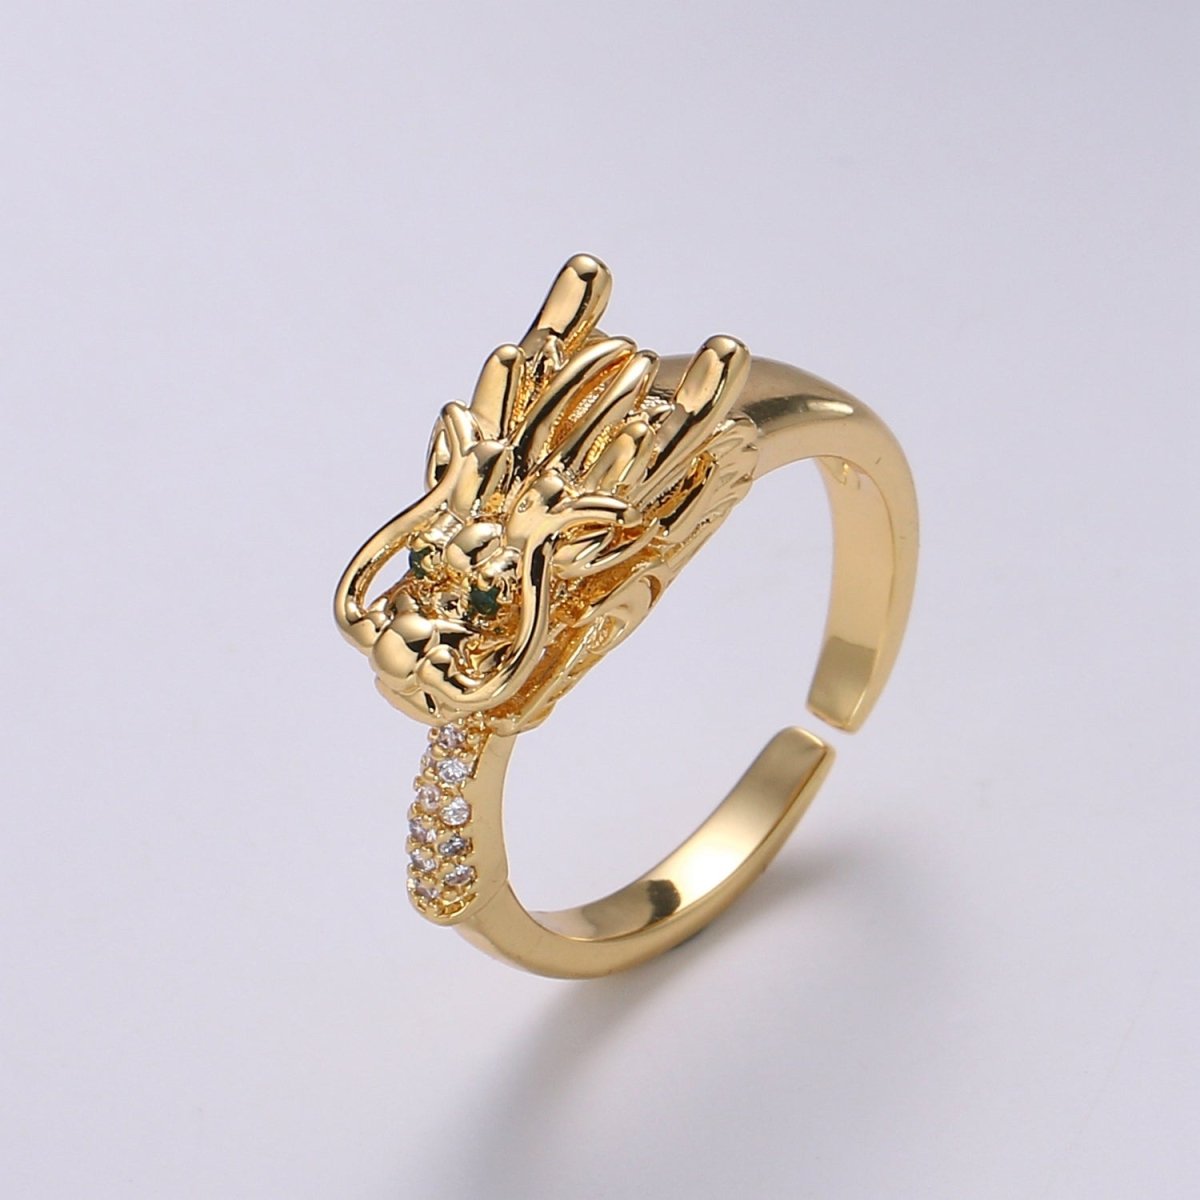 1pc Dragon Ring CZ Pave 24K Gold Ring, Animal Adjustable Gold Curb Ring, Bold Asian Dragon Ring, R-434 - DLUXCA